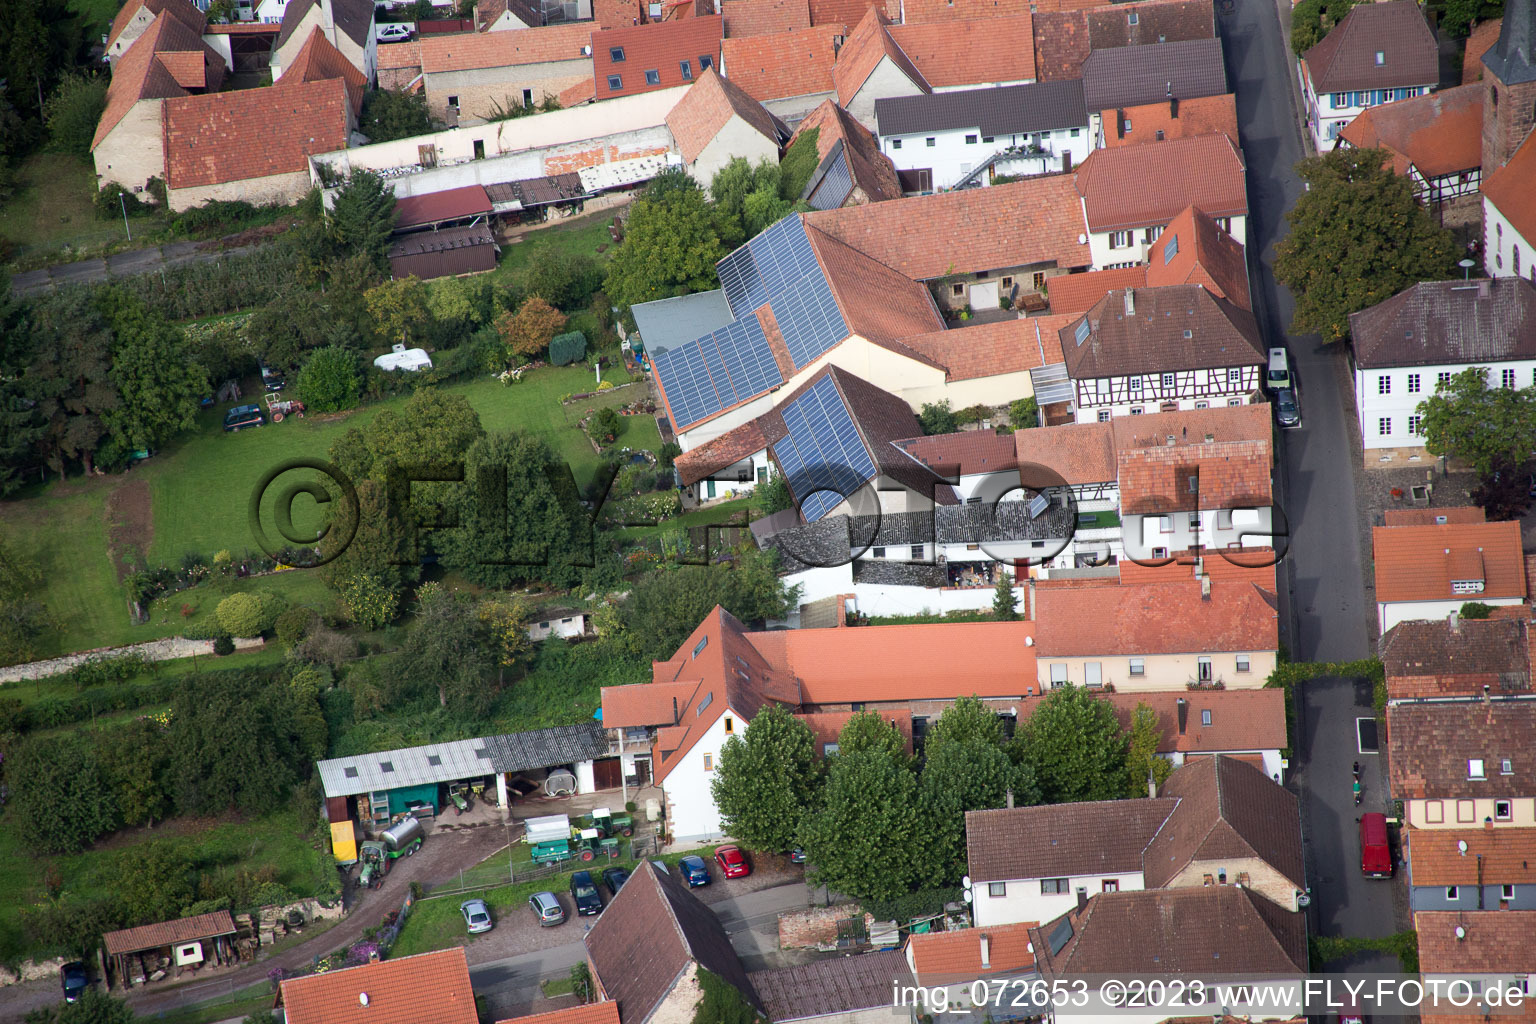 Vue aérienne de Quartier Heuchelheim in Heuchelheim-Klingen dans le département Rhénanie-Palatinat, Allemagne